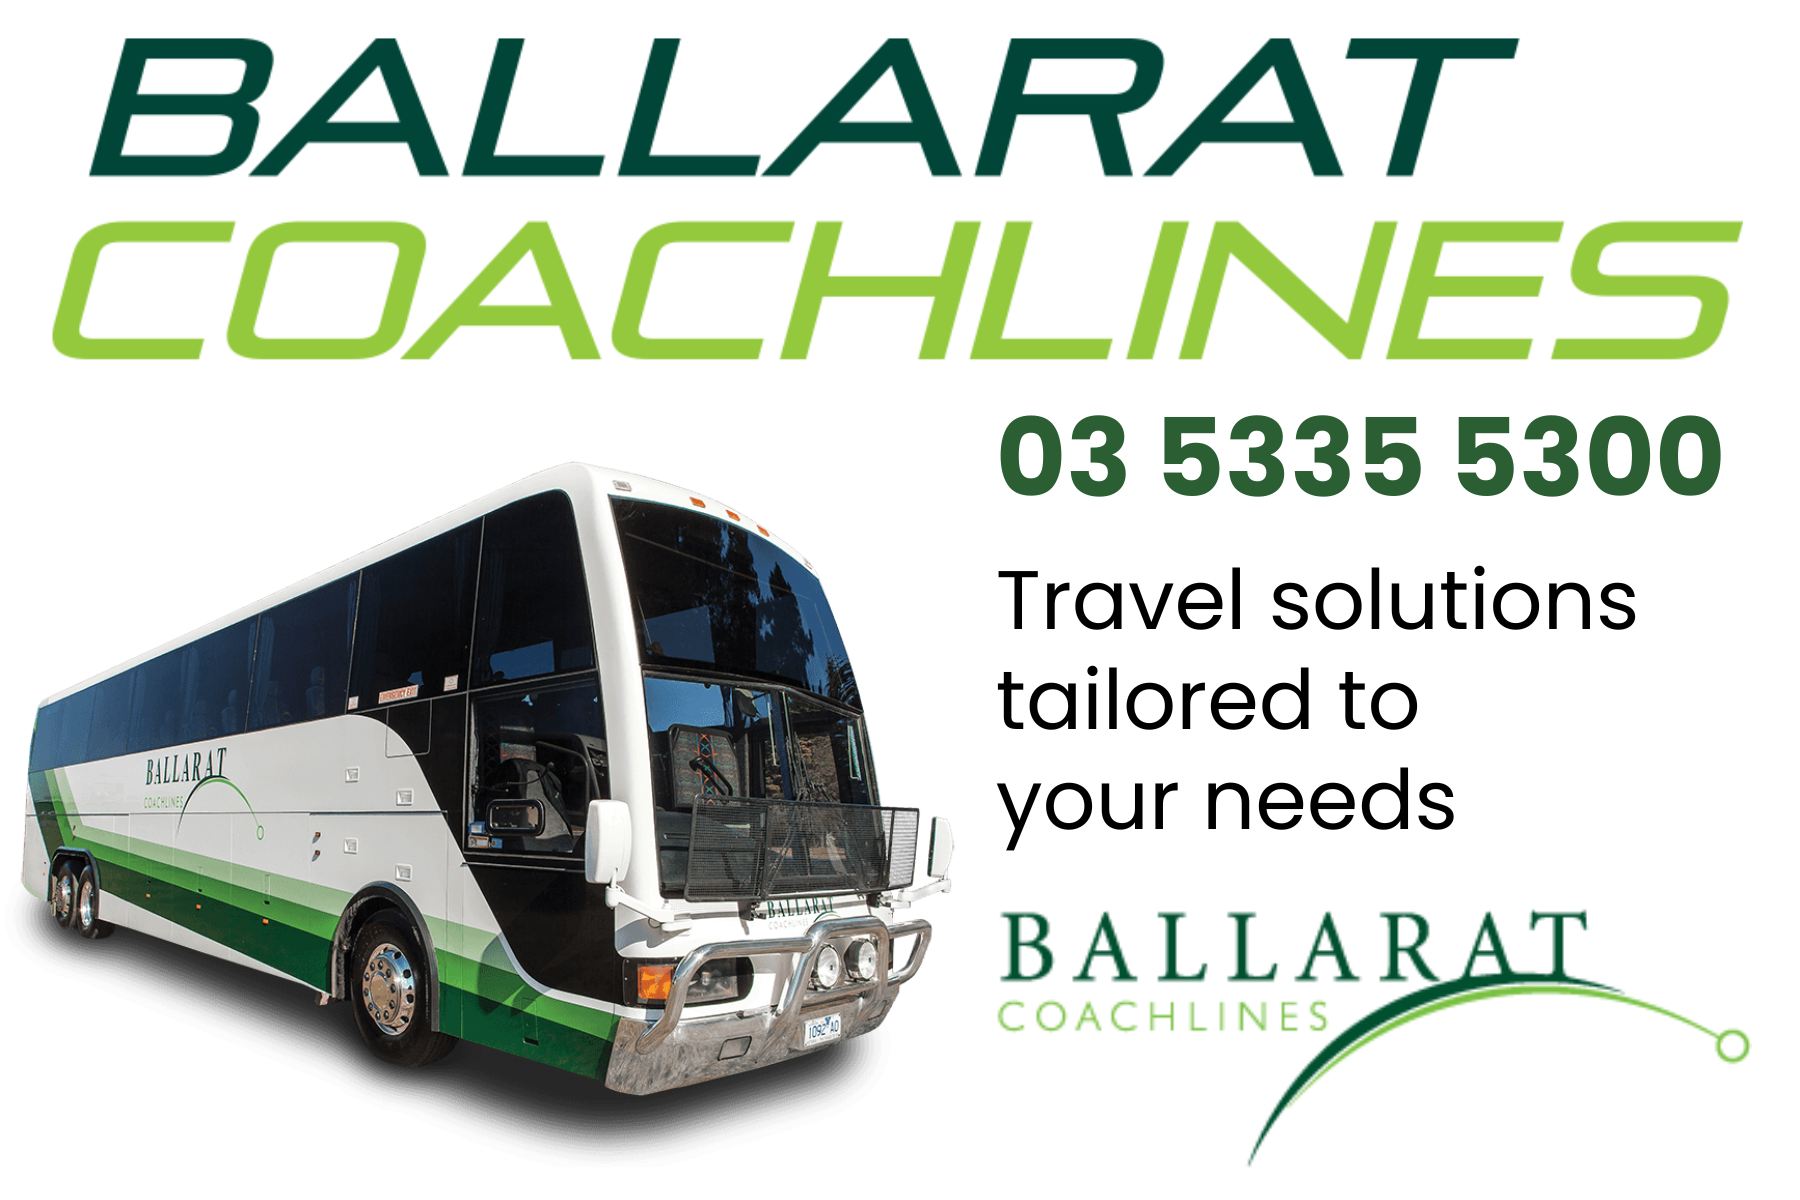 Ballarat Coachlines